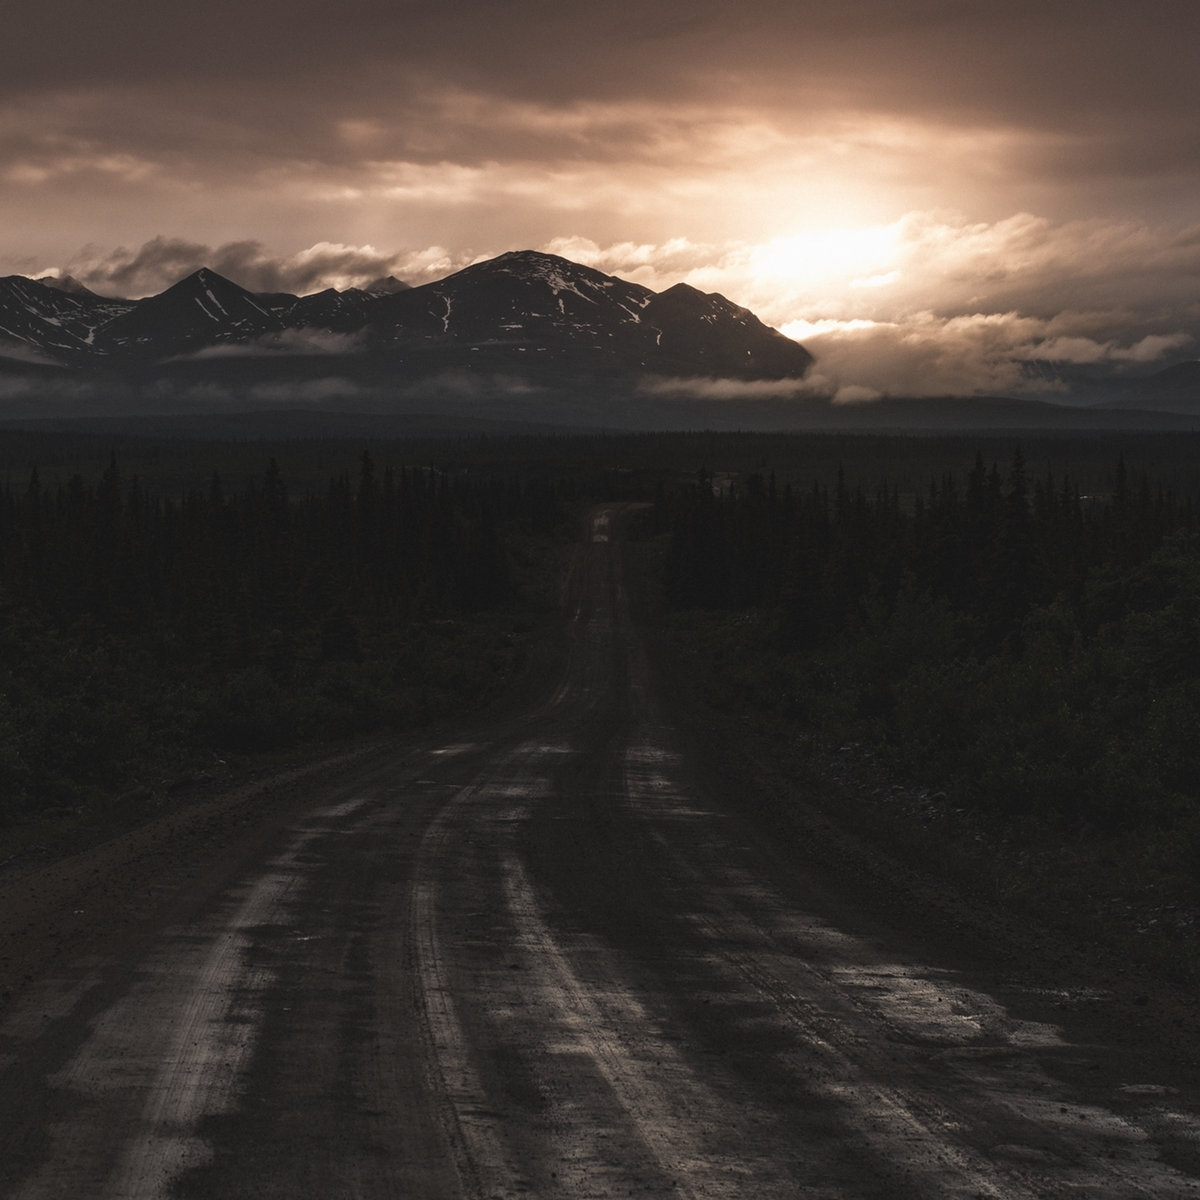 [album cover art] Carlos Ferreira & deer meadow – In a sad red dusk, we were finally leaving